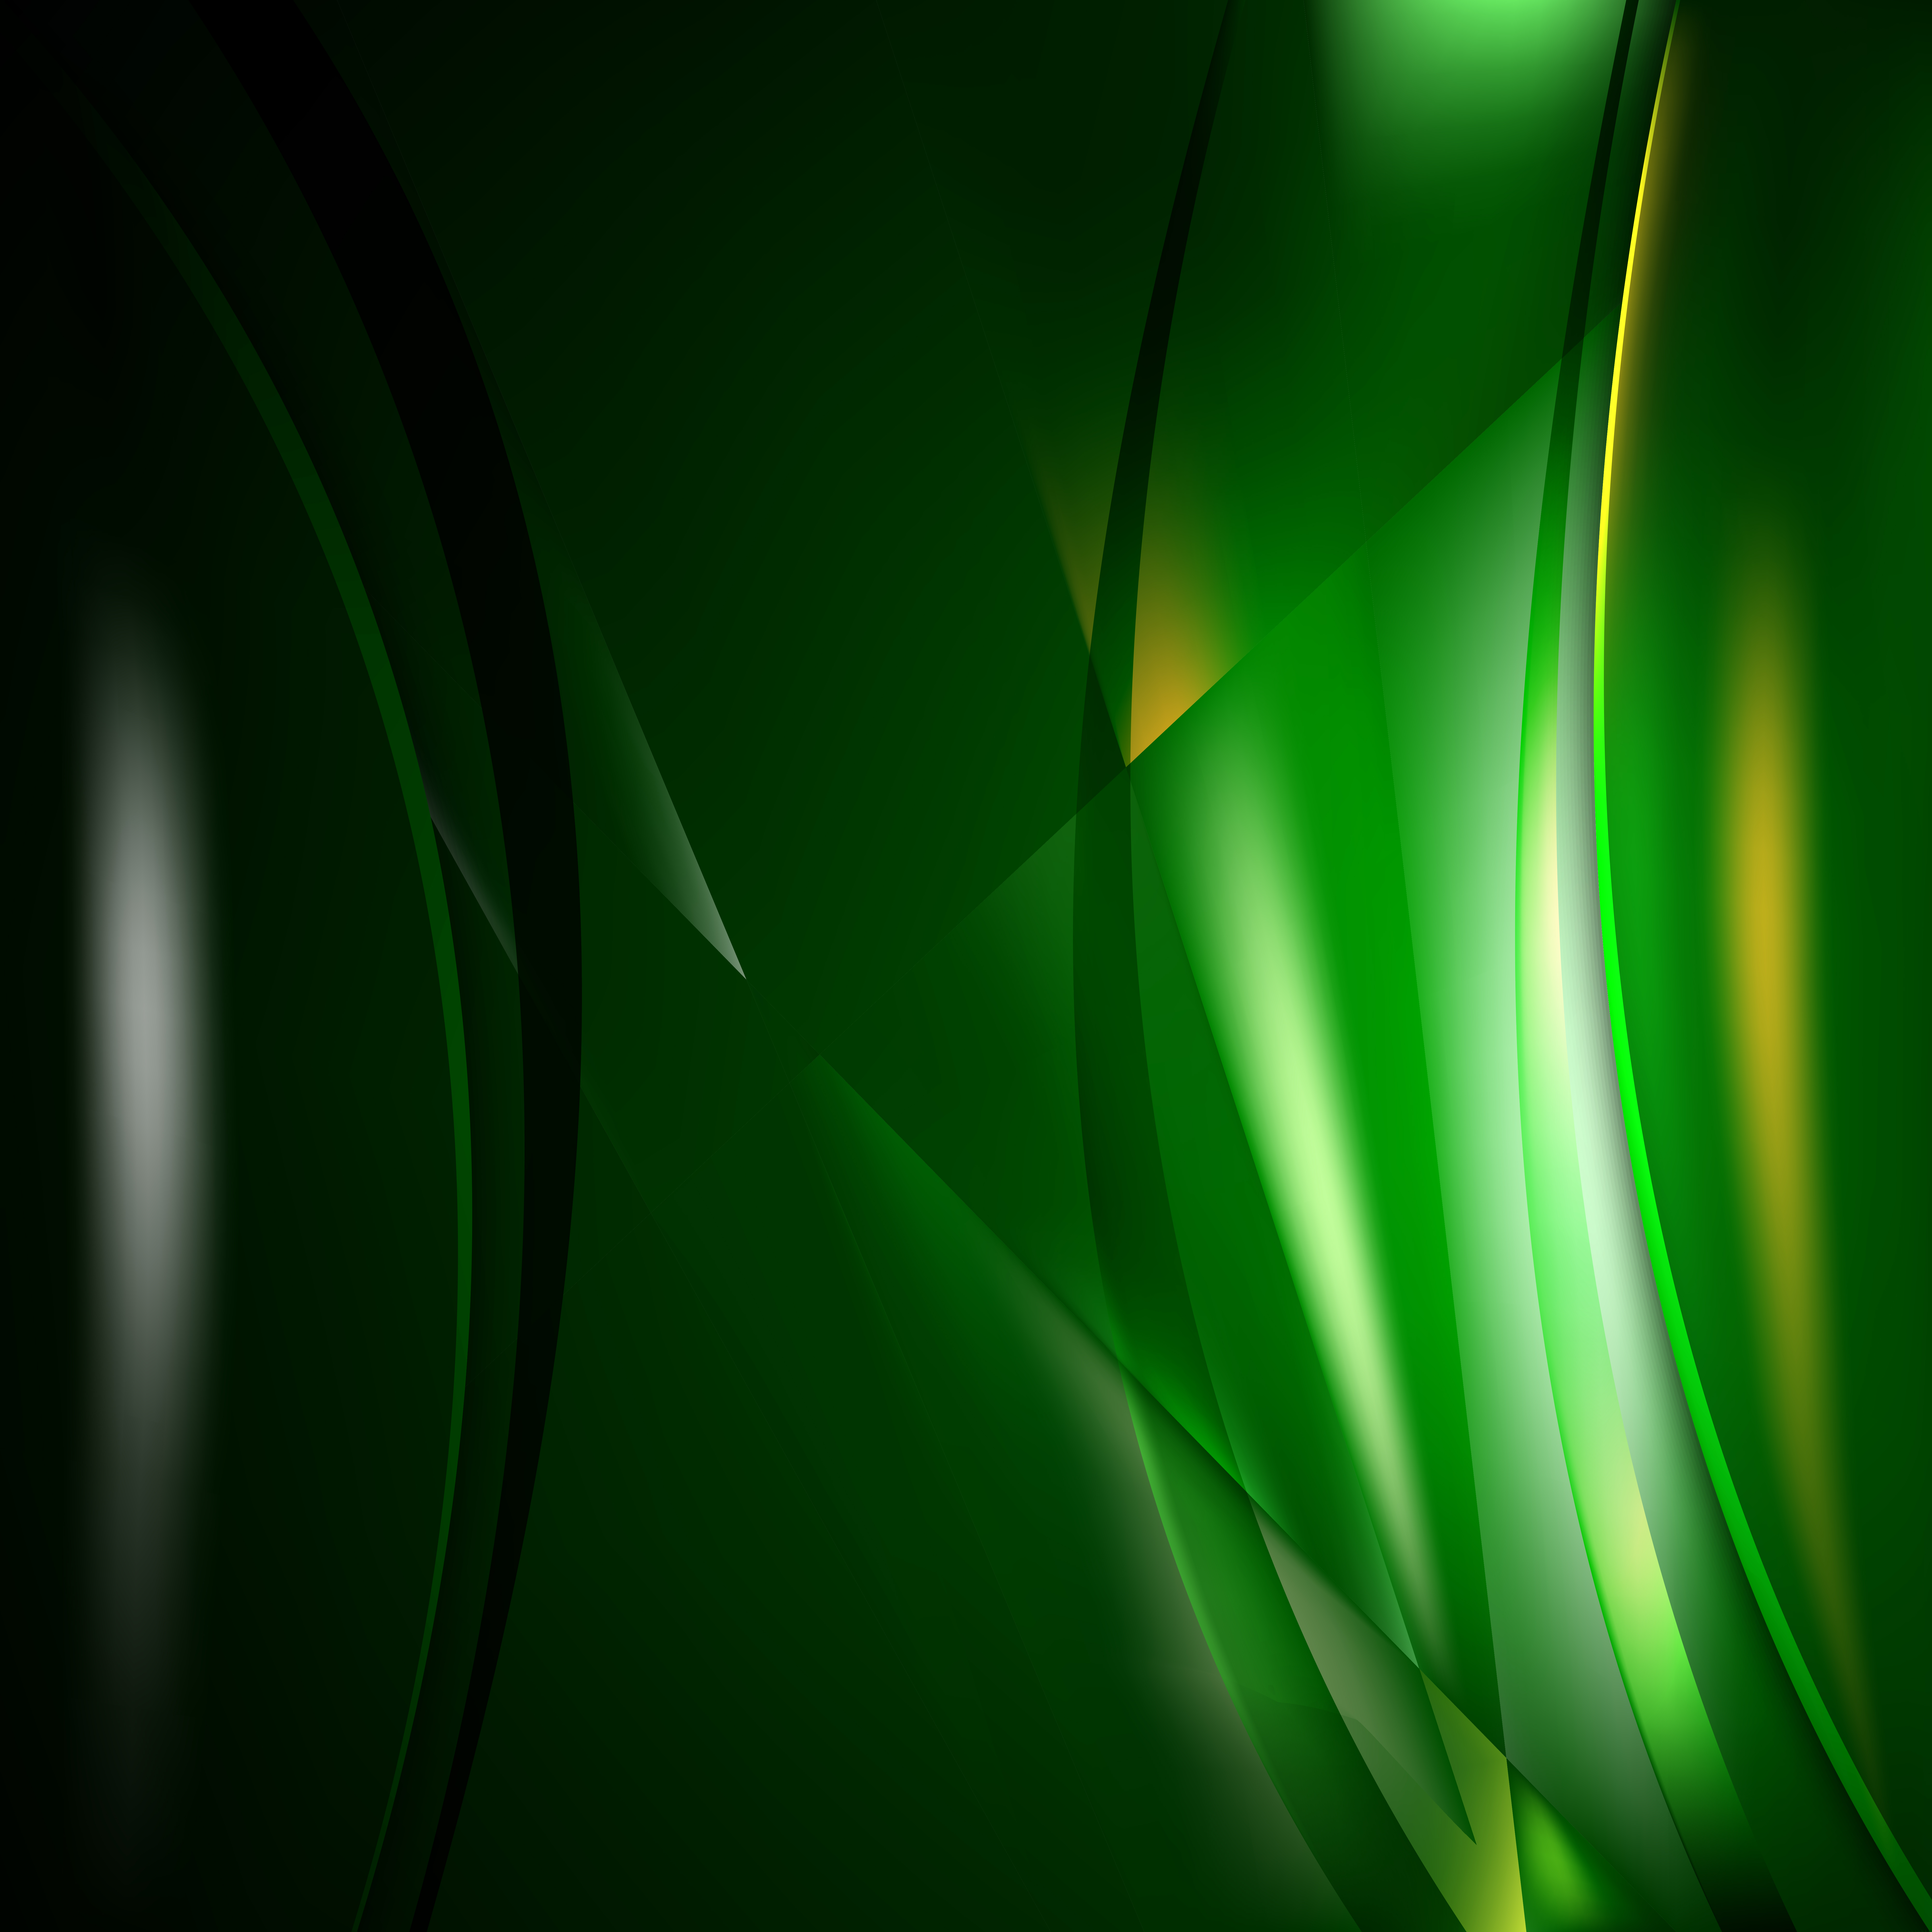 vm94-line-art-abstract-green-pattern